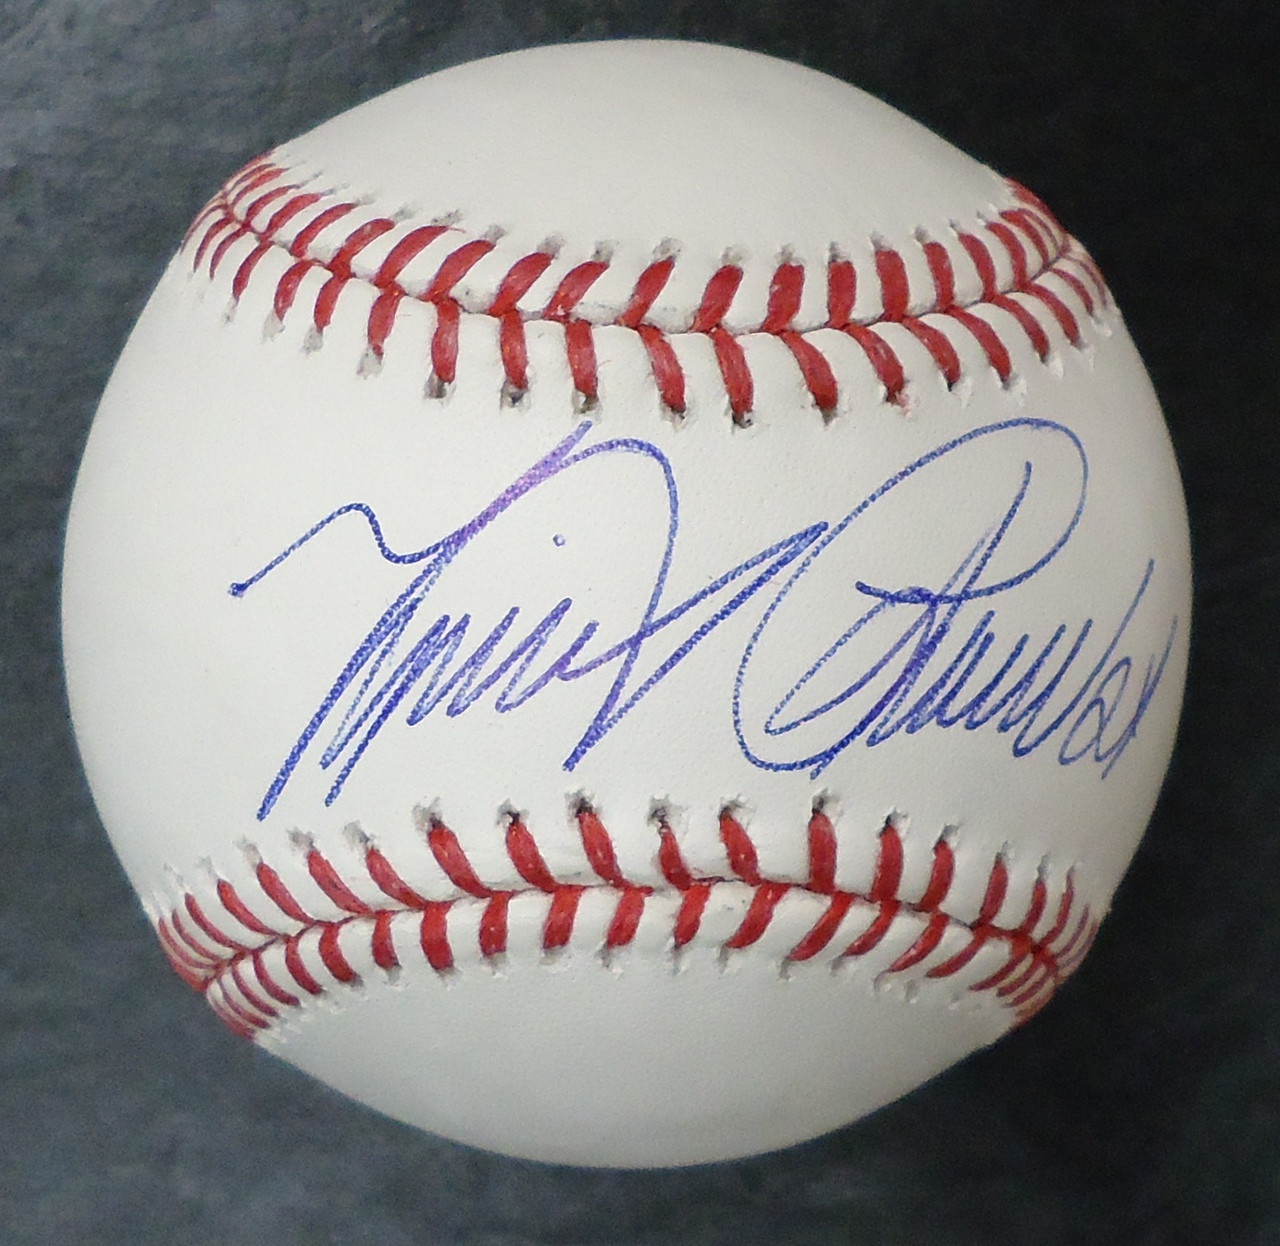 Miguel Cabrera Autographed Baseball - Official Major League Ball